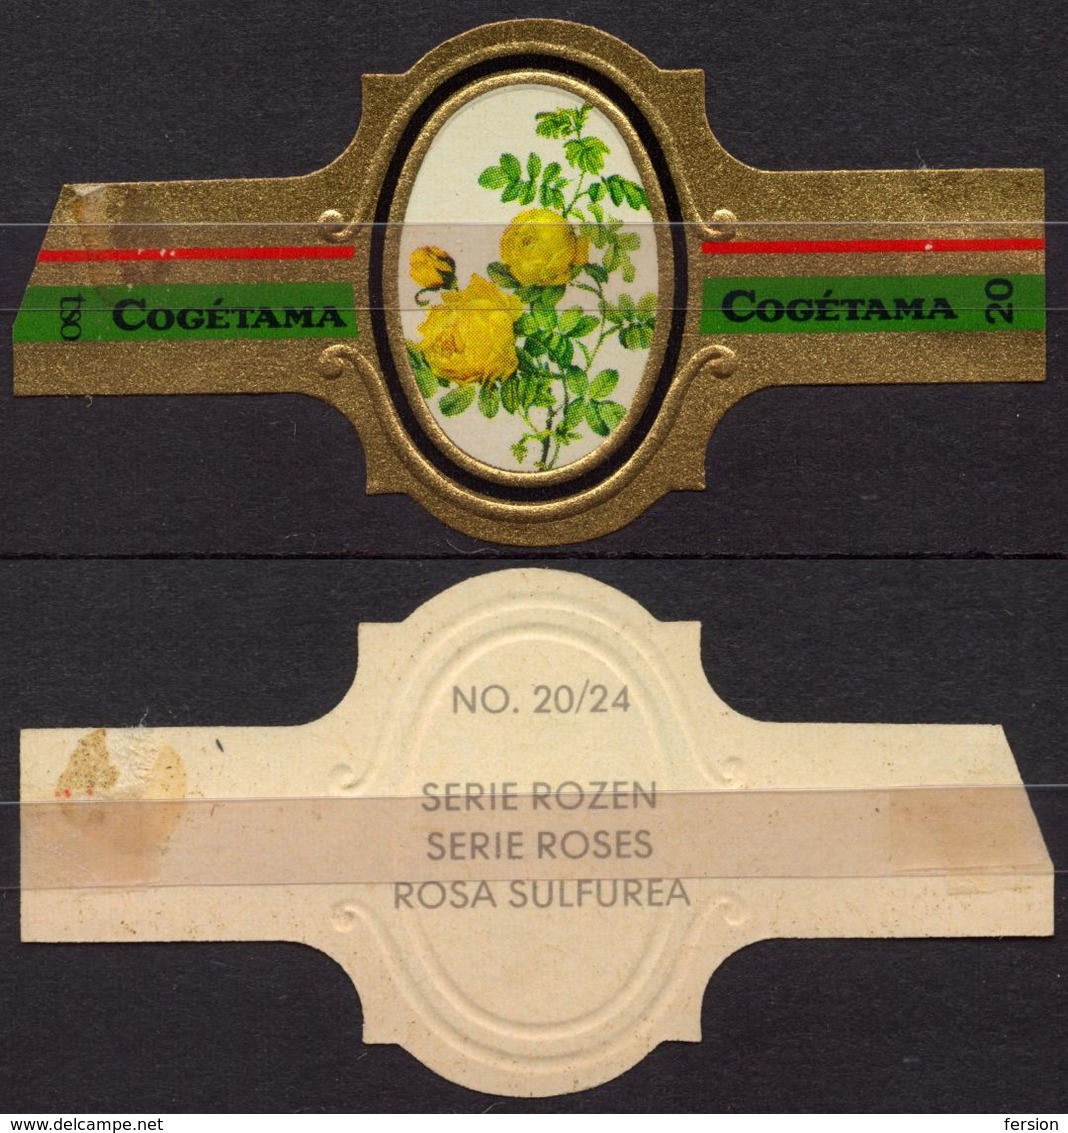 Sulfurea - ROSE ROSES - Netherlands Holland / Cogétama / CIGAR CIGARS Label Vignette - Etiquetas